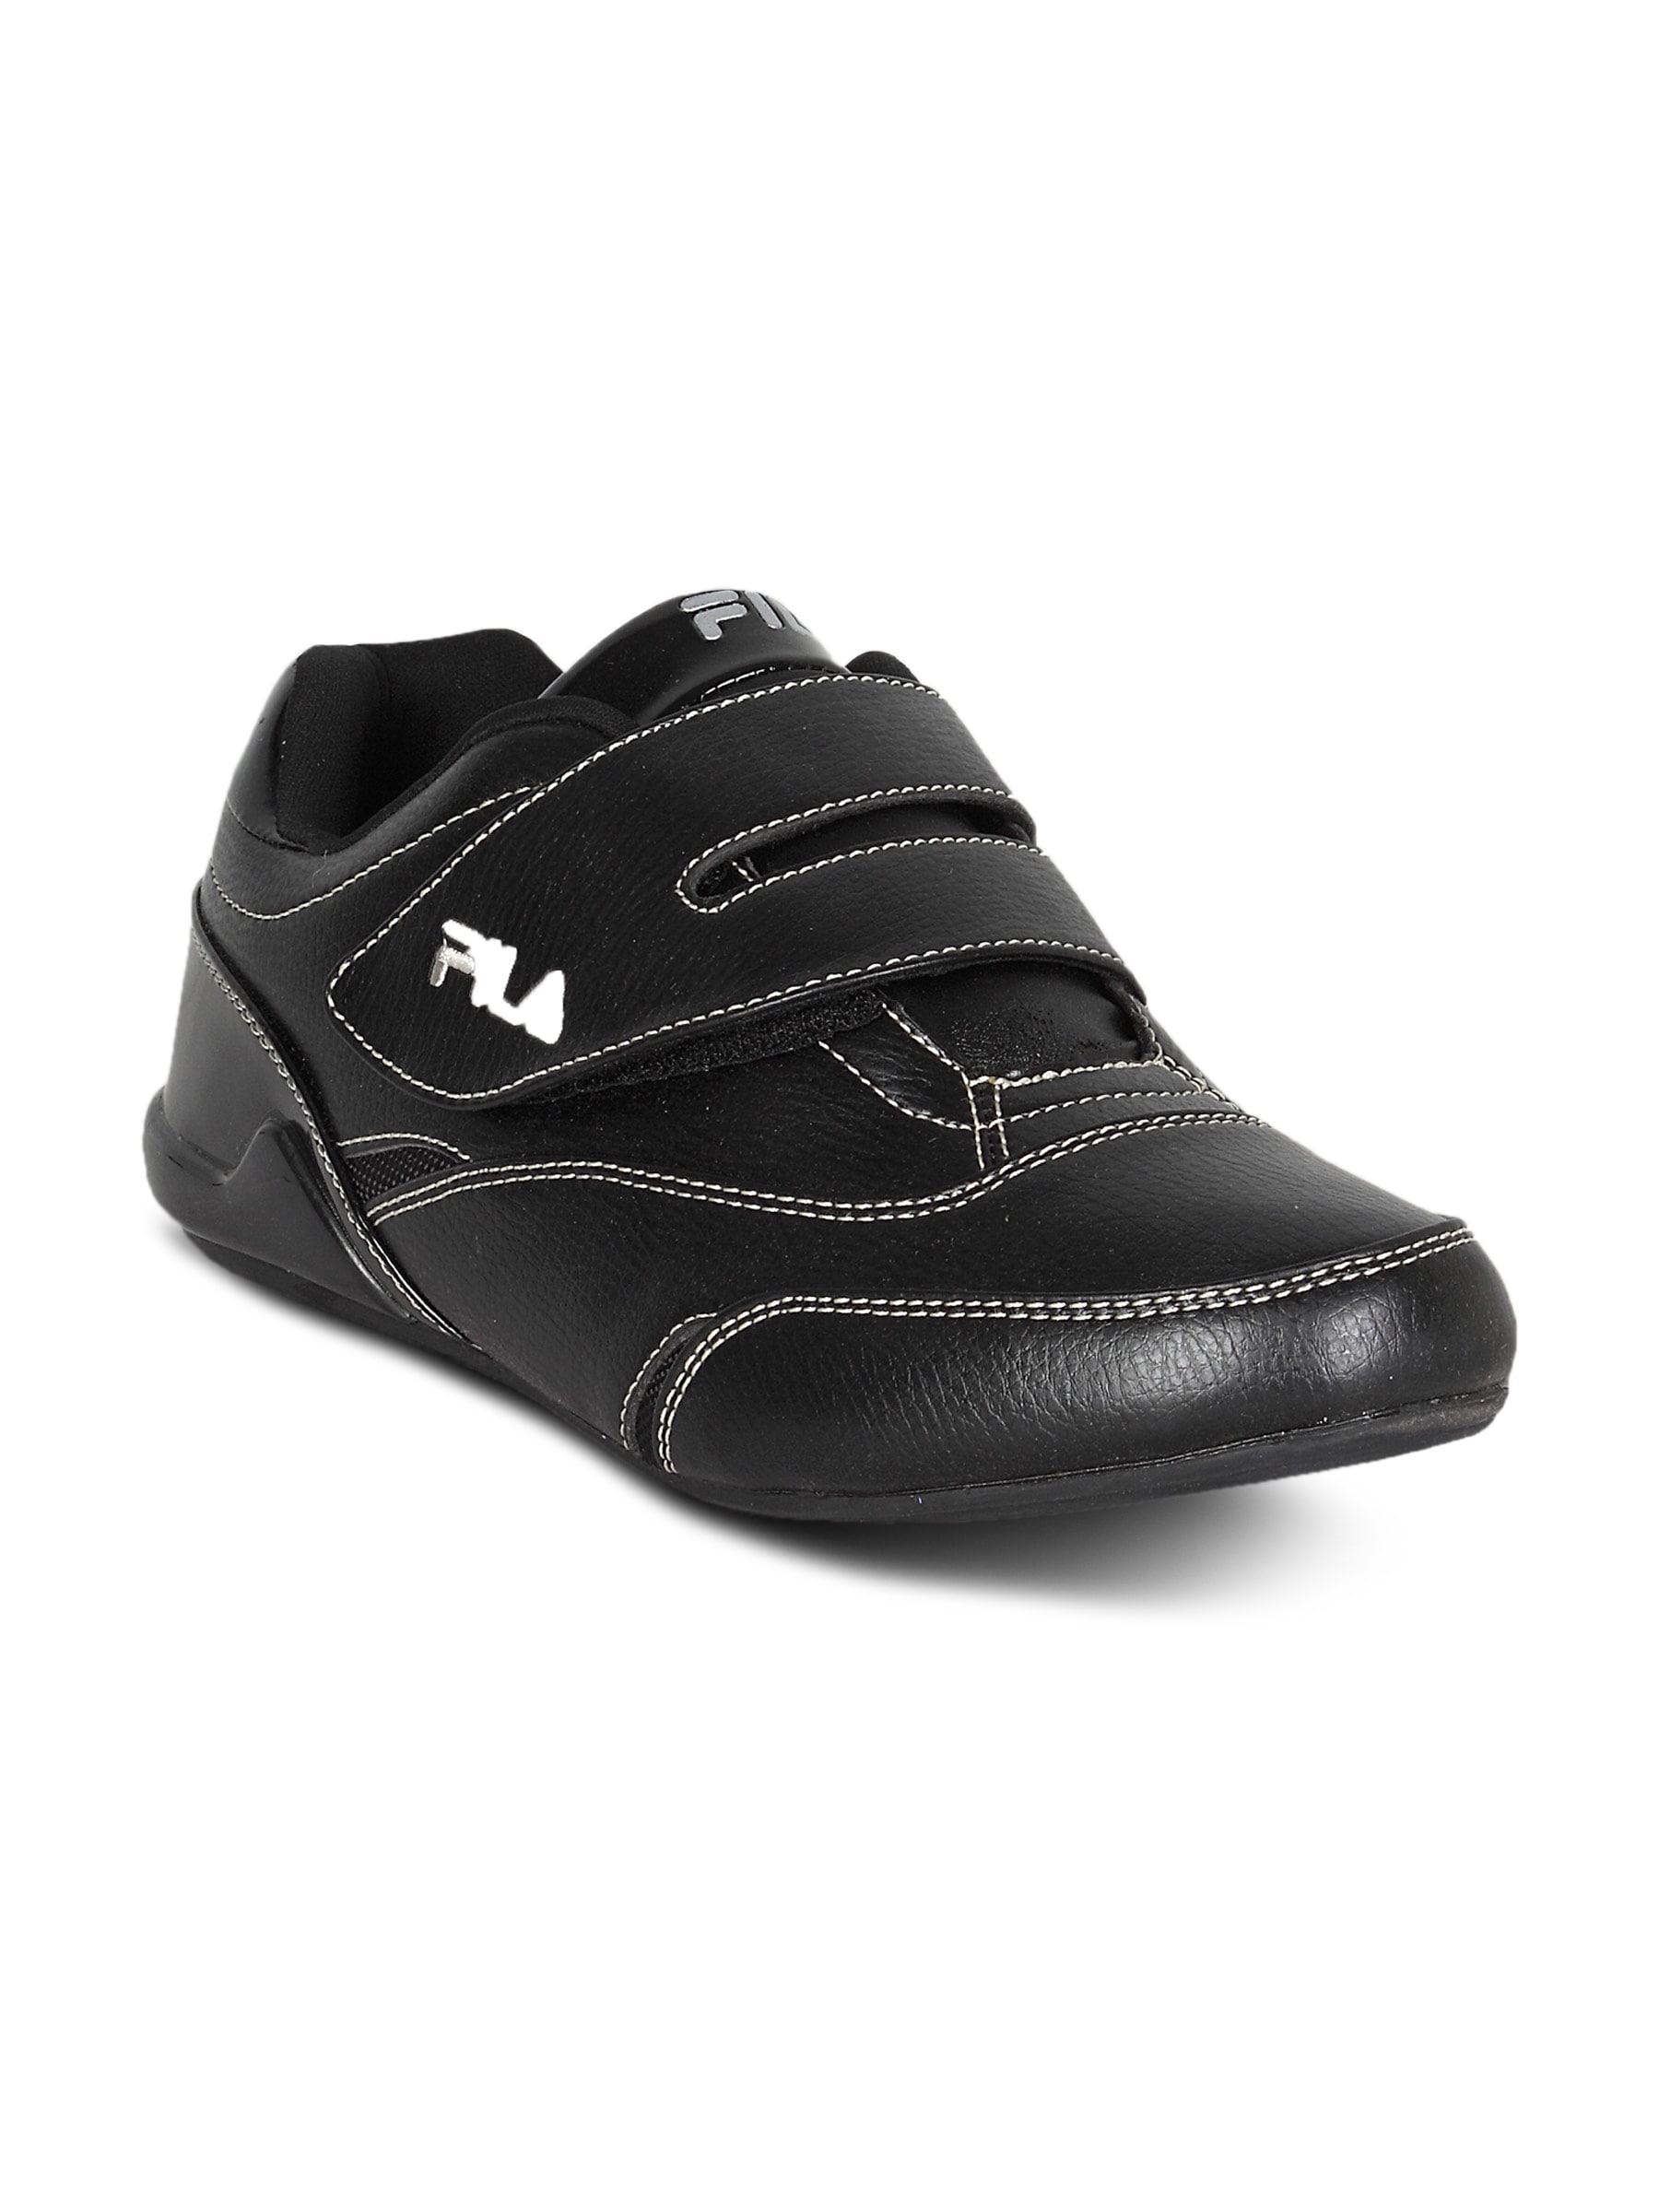 Fila Men's Galliant Black Shoe